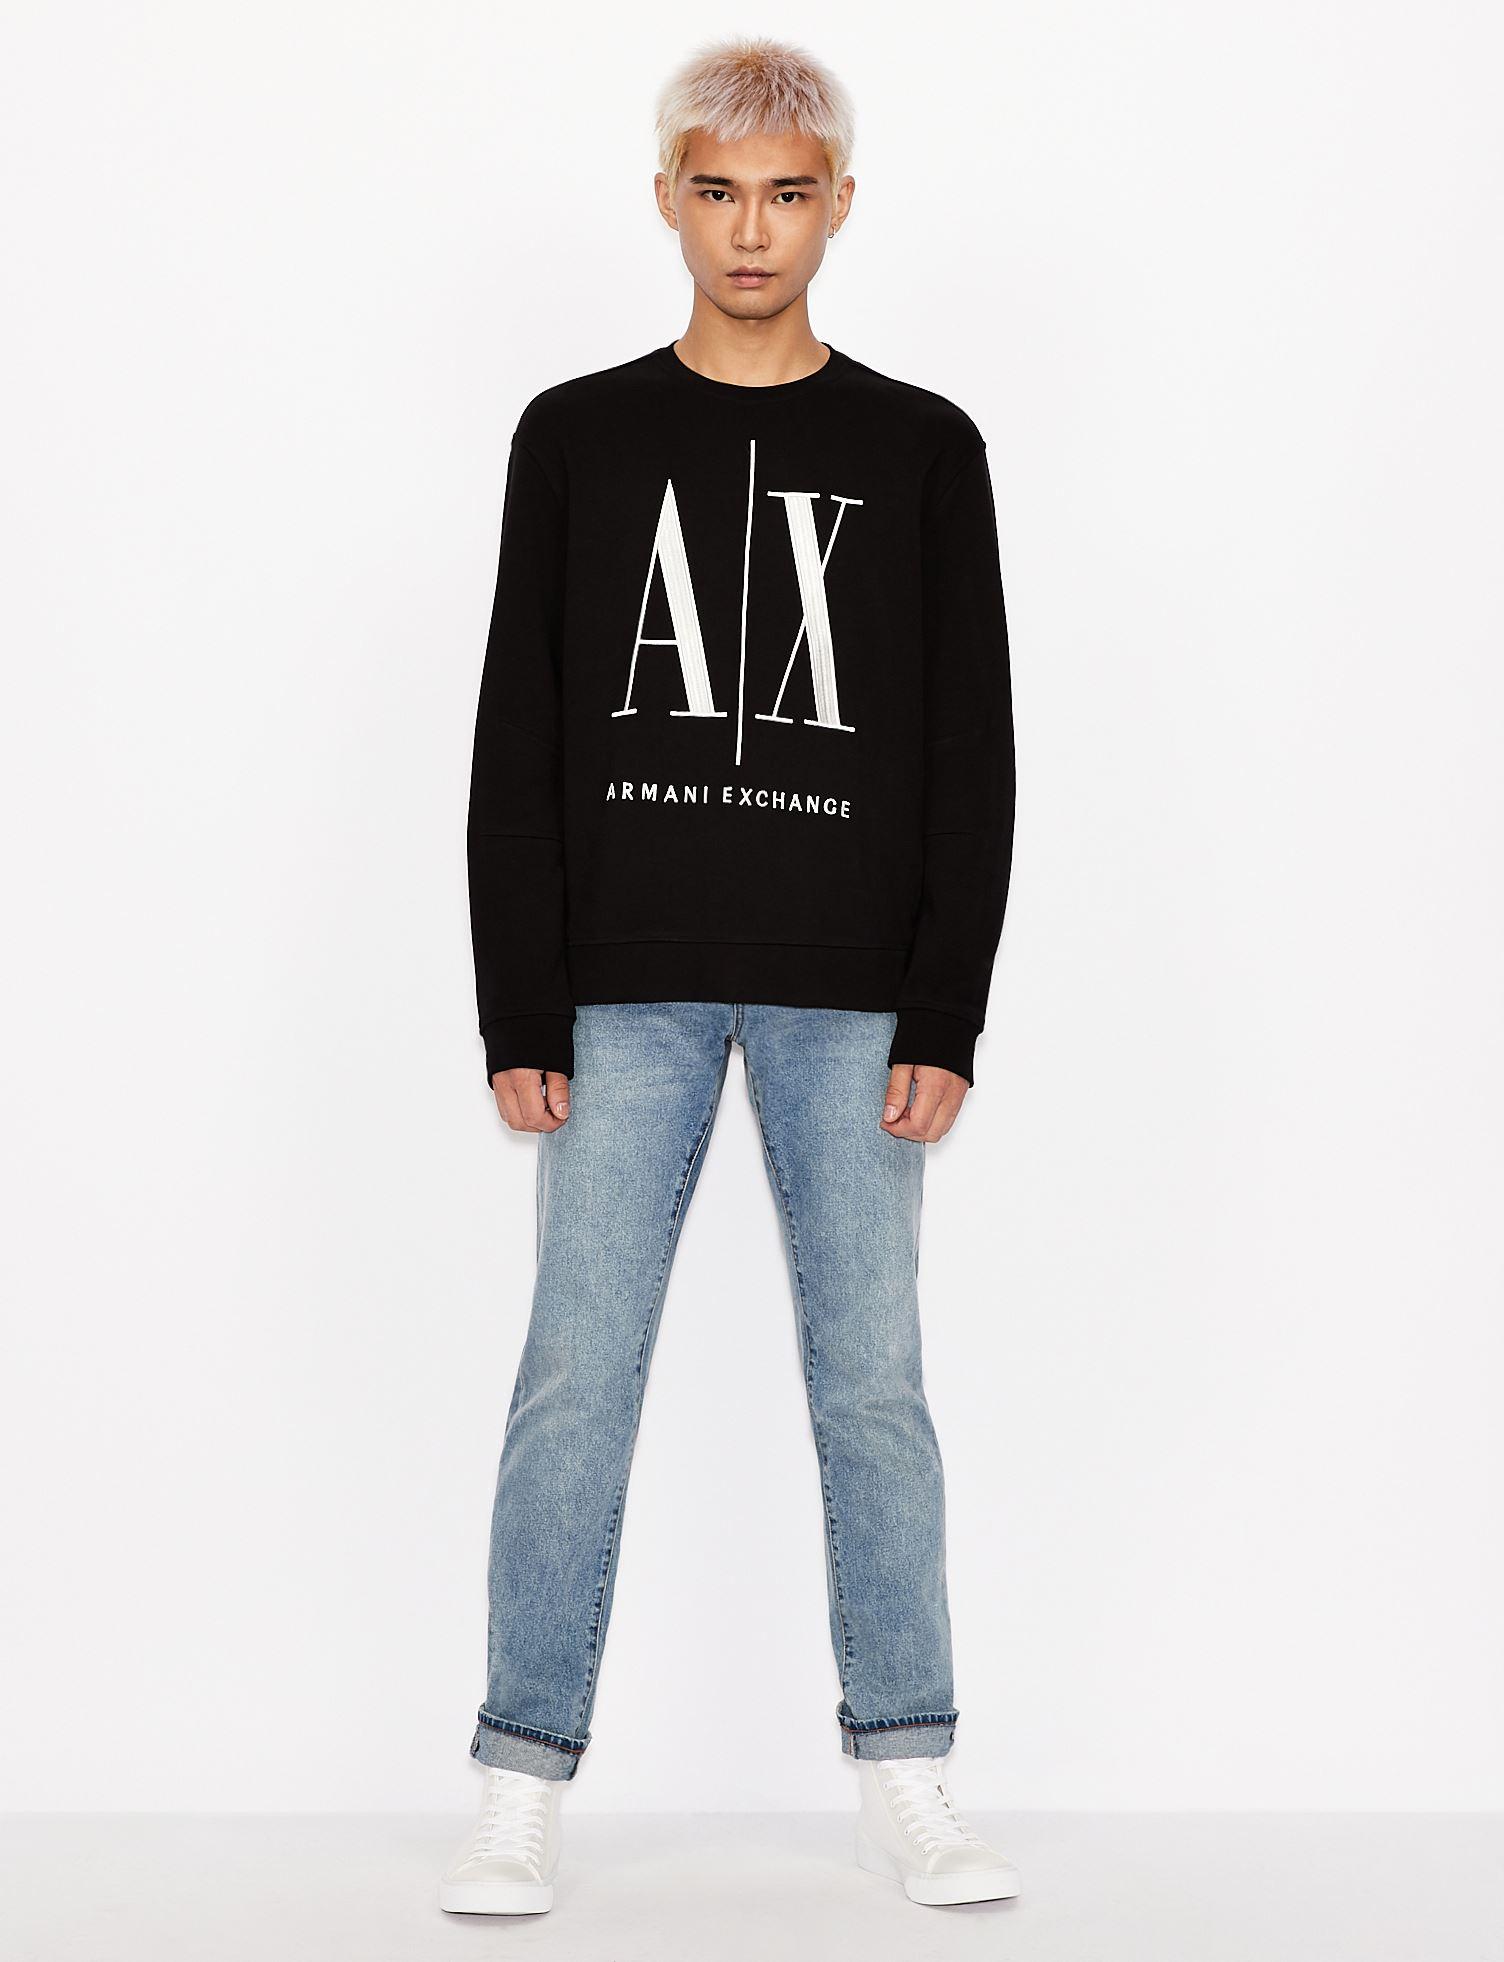 Armani Icon Sweatshirt in Black for Men - Lyst